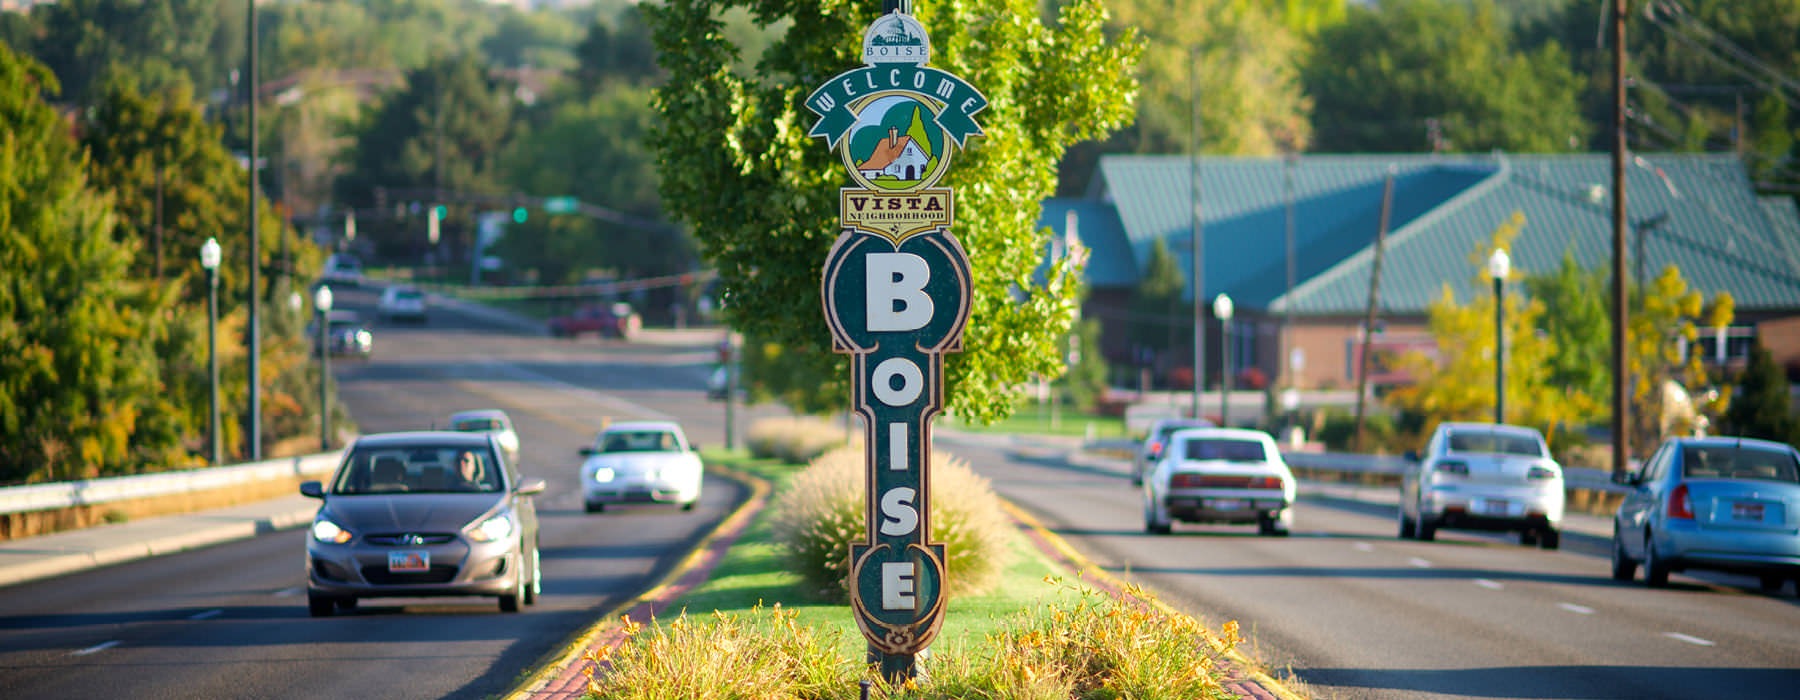 Boise bench location road sign entrance to Vista neighborhood